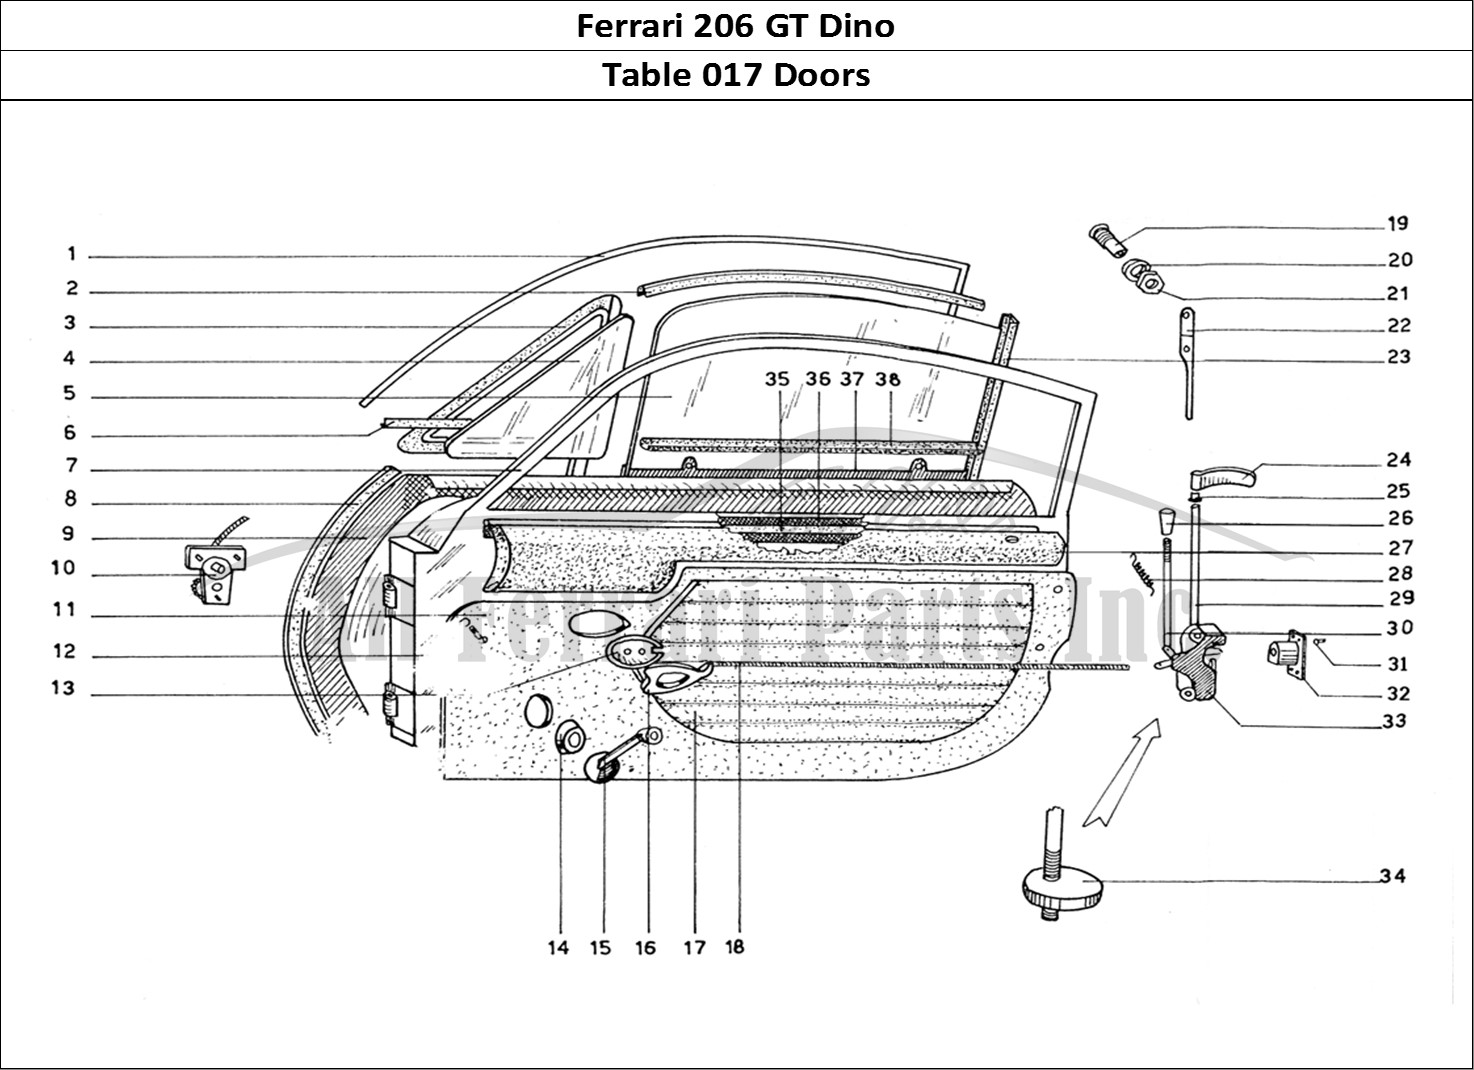 Ferrari Parts Ferrari 206 GT Dino (Coachwork) Page 017 Doors,Trims & Finishings